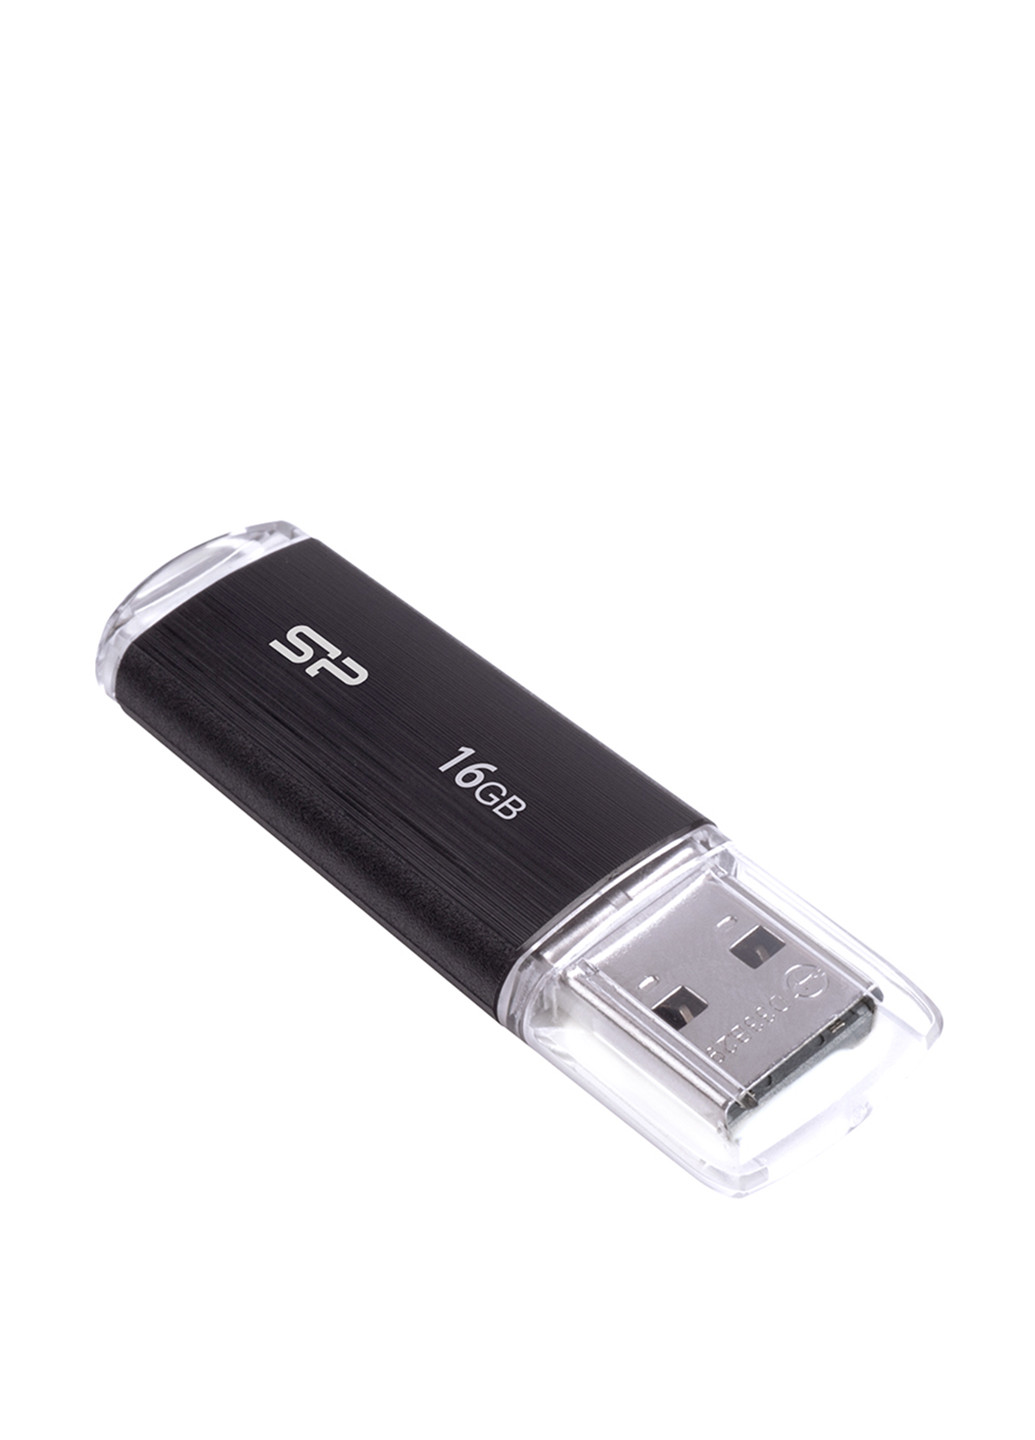 Флеш пам'ять USB Ultima U02 16GB USB 2.0 Black (SP016GBUF2U02V1K) Silicon Power флеш память usb silicon power ultima u02 16gb usb 2.0 black (sp016gbuf2u02v1k) (130221133)